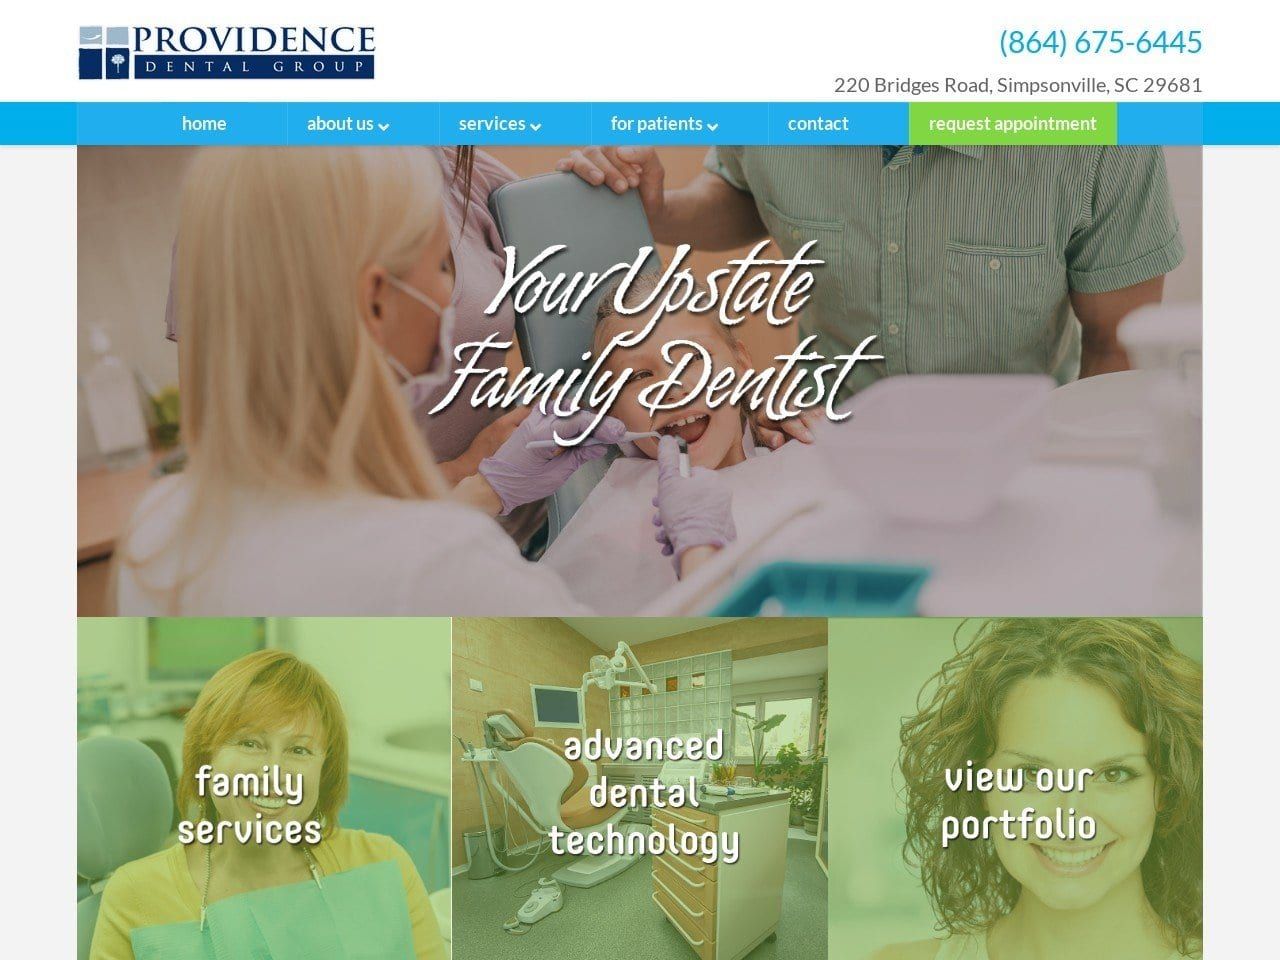 Providence Dental Group Website Screenshot from providencedentalgroup.com